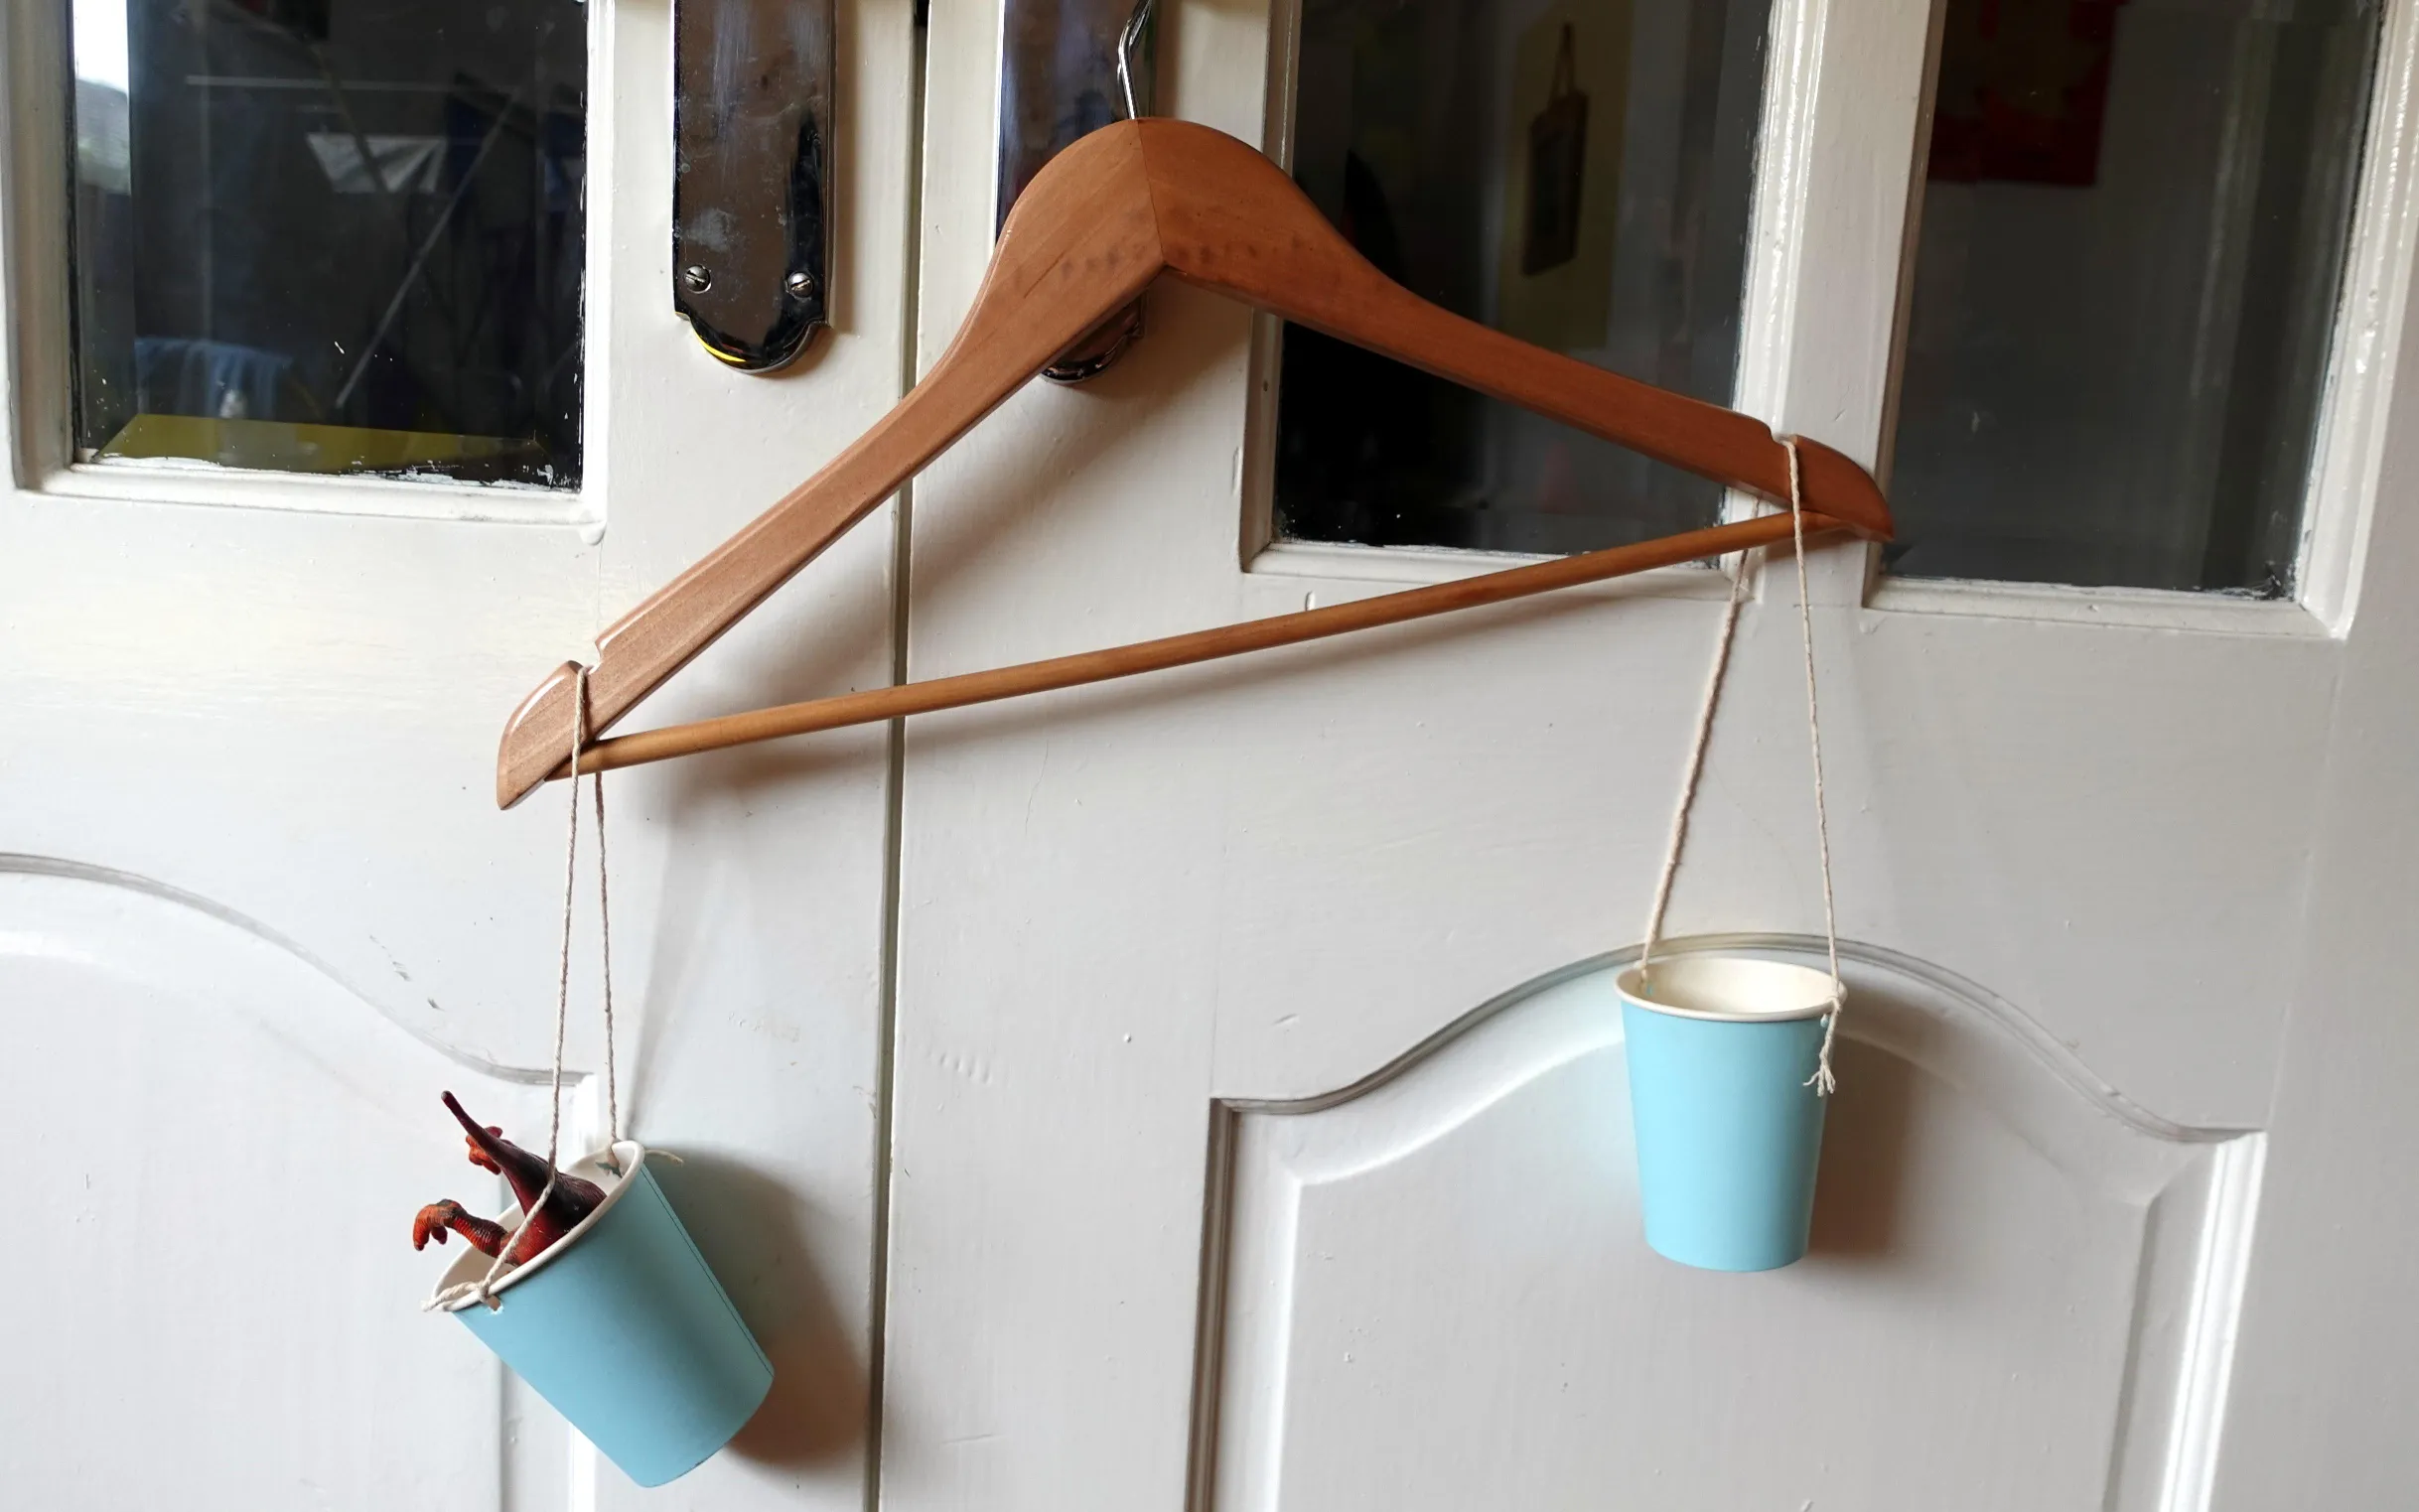 Clothes Hanger Balance Scale